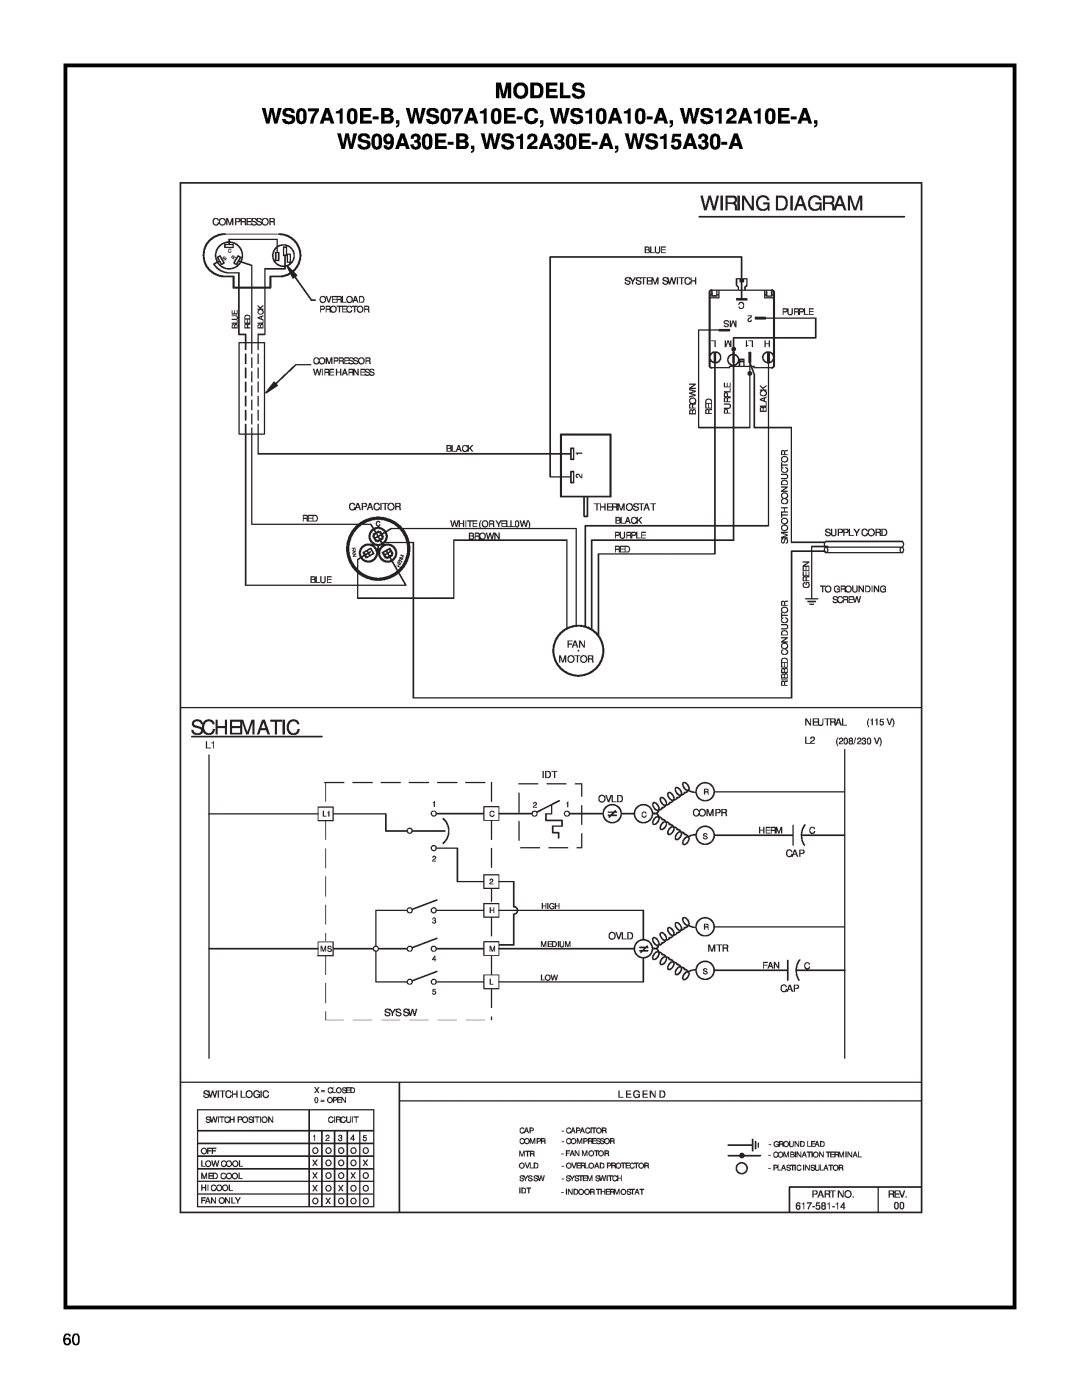 Friedrich racservmn service manual Wiring Diagram, Schematic, Models, WS07A10E-B, WS07A10E-C, WS10A10-A, WS12A10E-A 